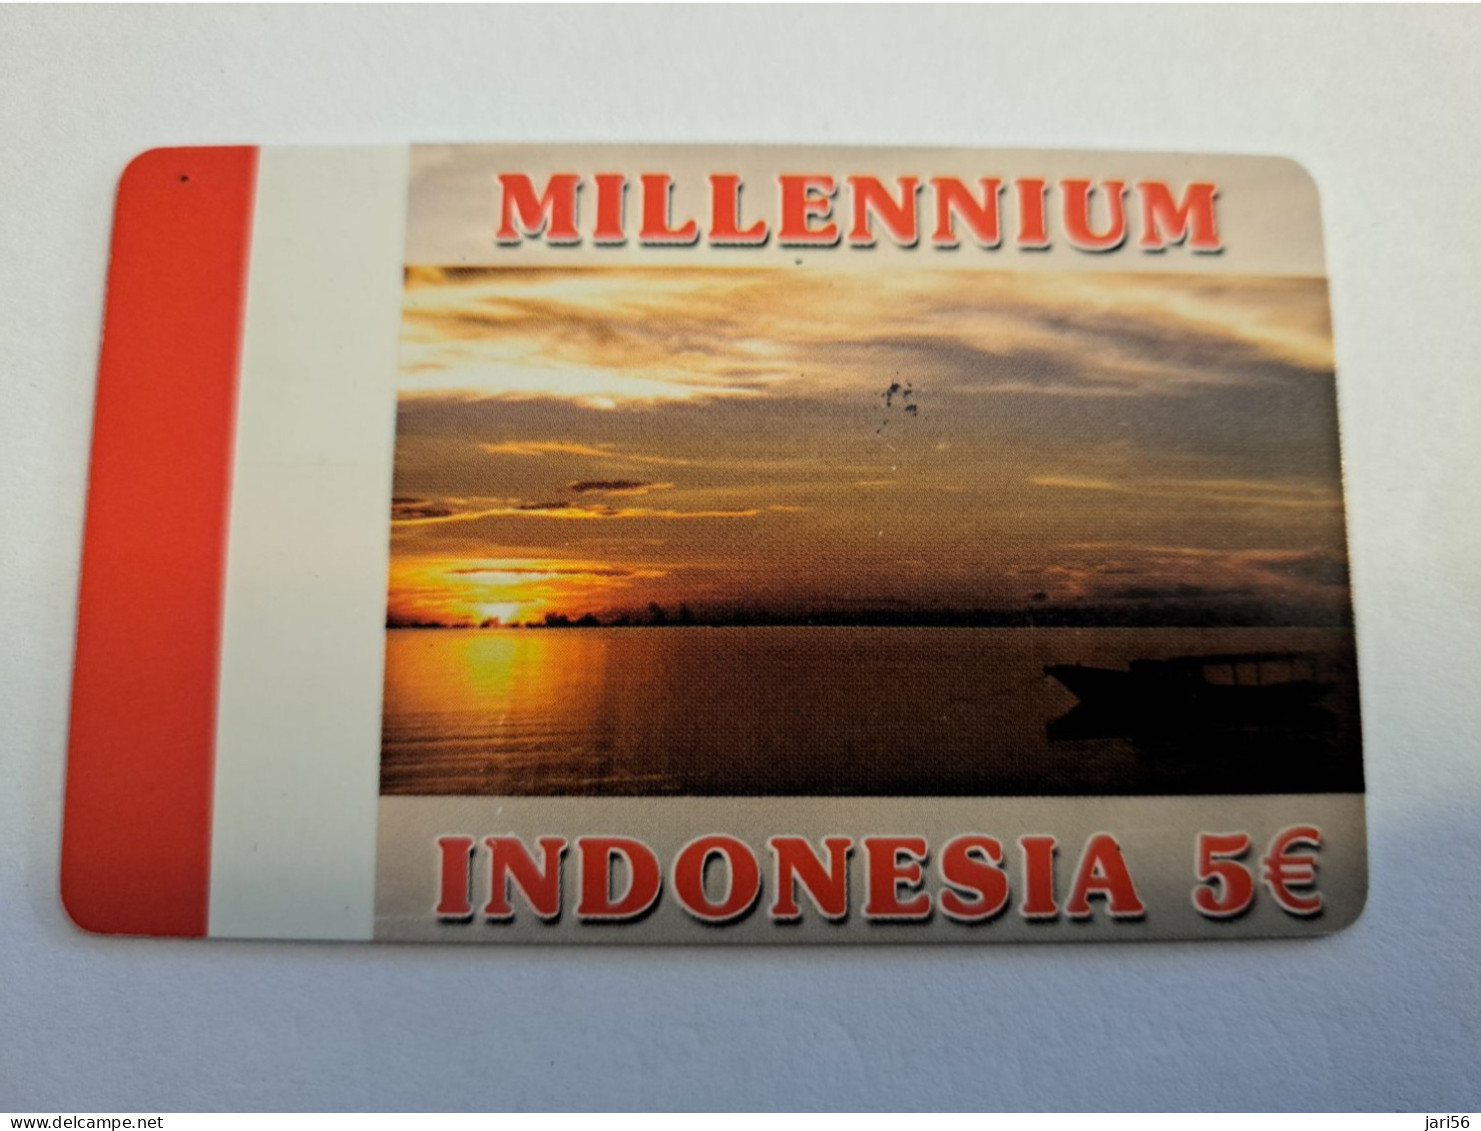 GRIEKENLAND/GREECE / €5,- PREPAID CARD/ INDONESIA / MILLENIUM / BOAT     Fine Used Card  **16217 ** - Grecia